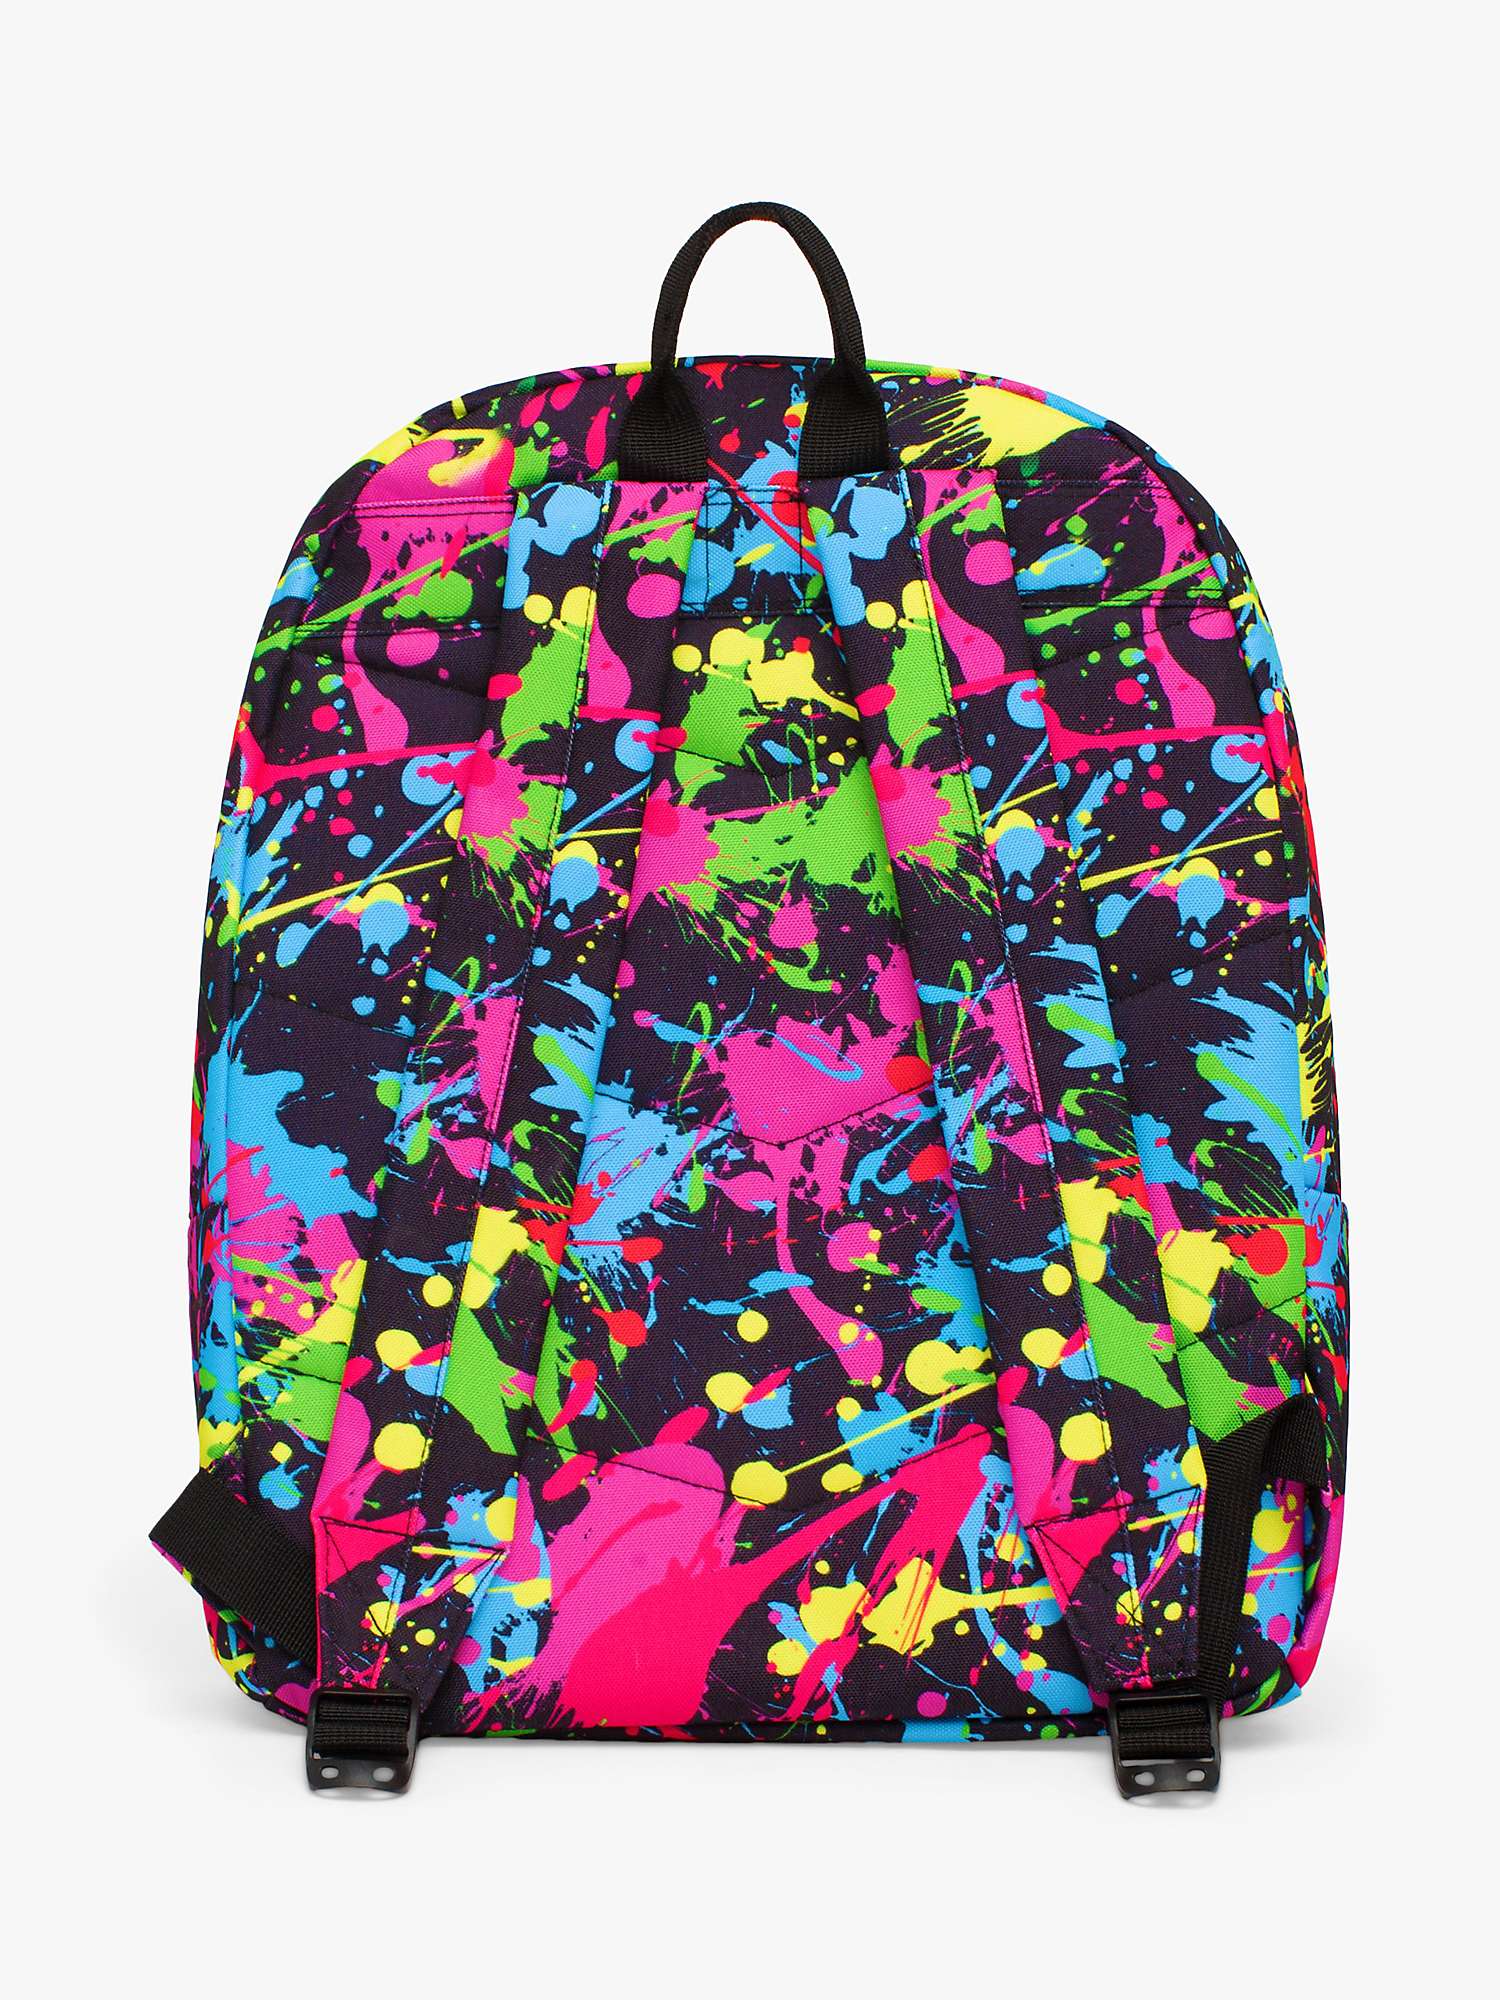 Buy Hype Kids' Rainbow Paint Splat Backpack, Black/Multi Online at johnlewis.com